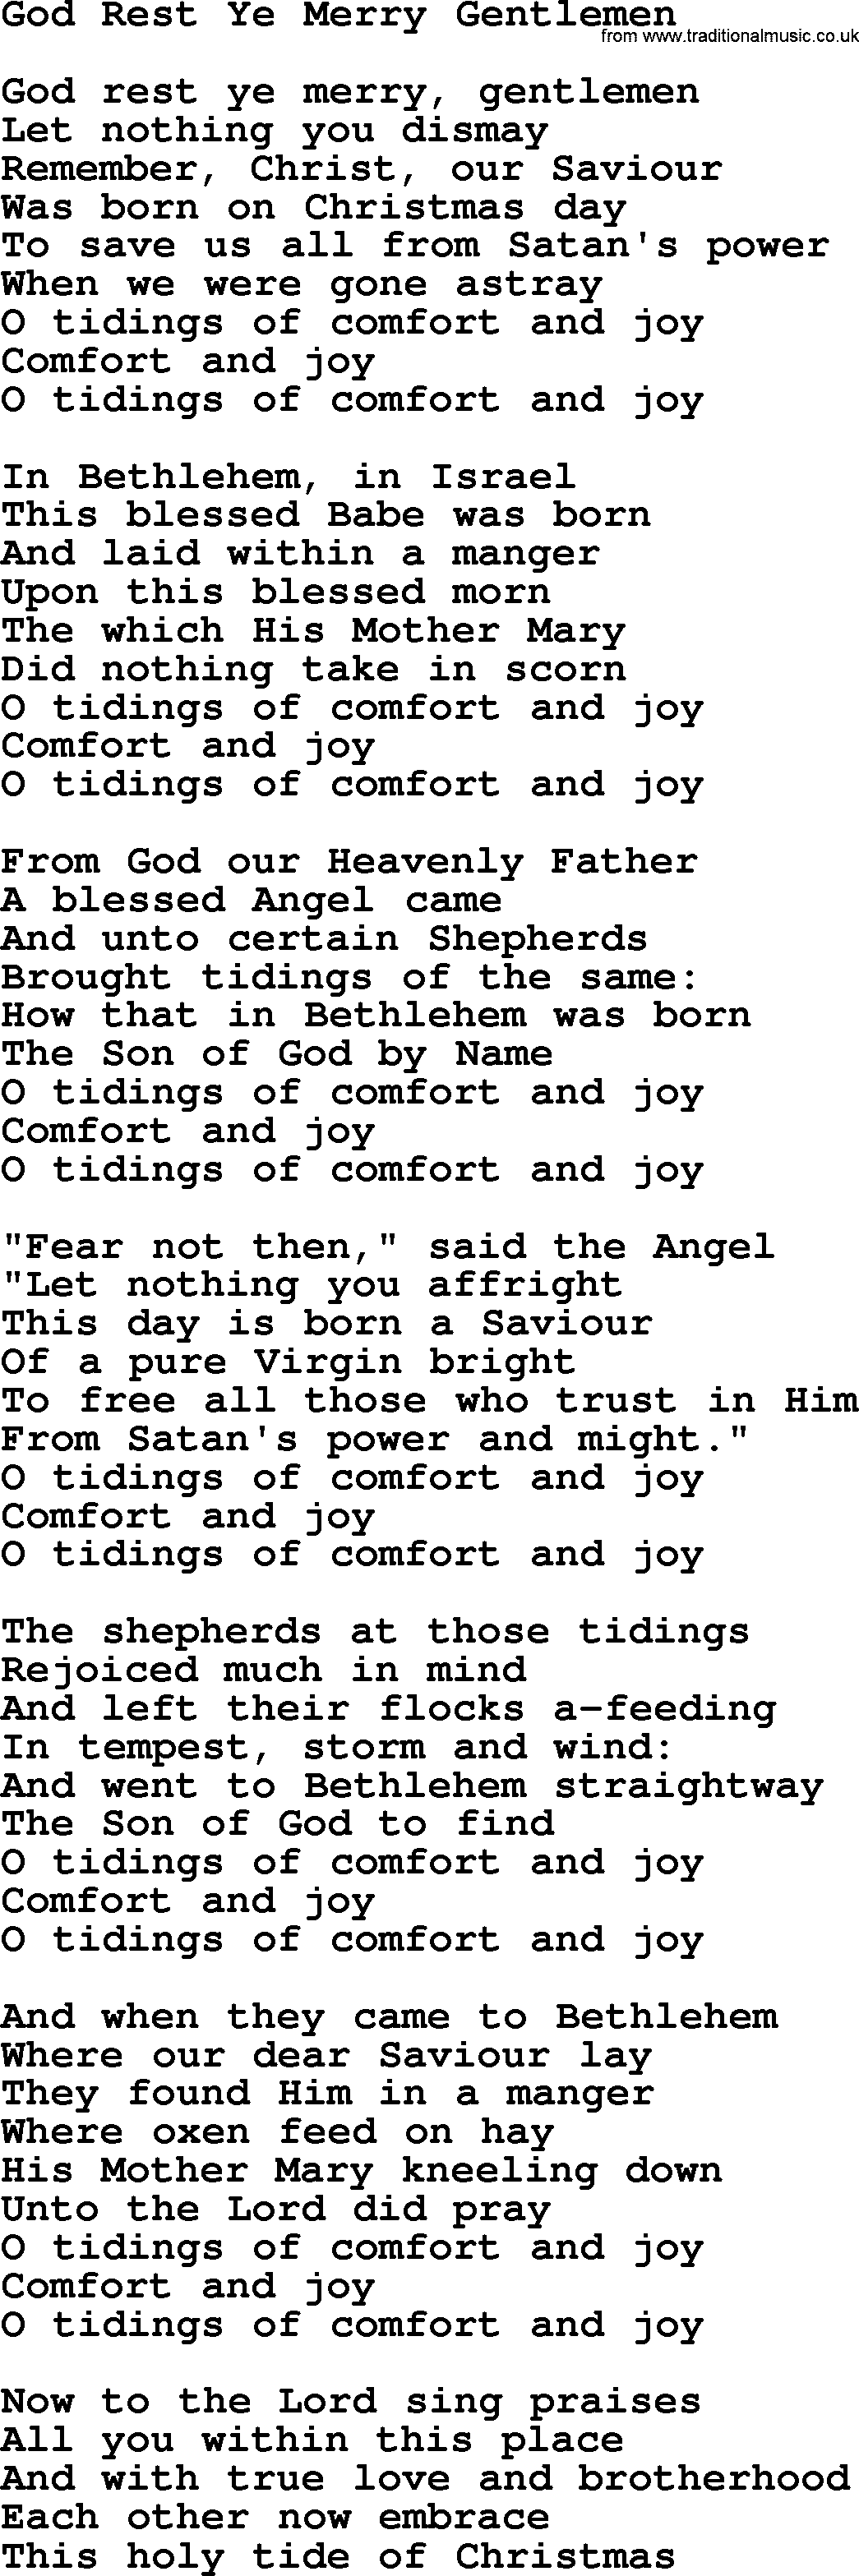 The Byrds song God Rest Ye Merry Gentlemen, lyrics